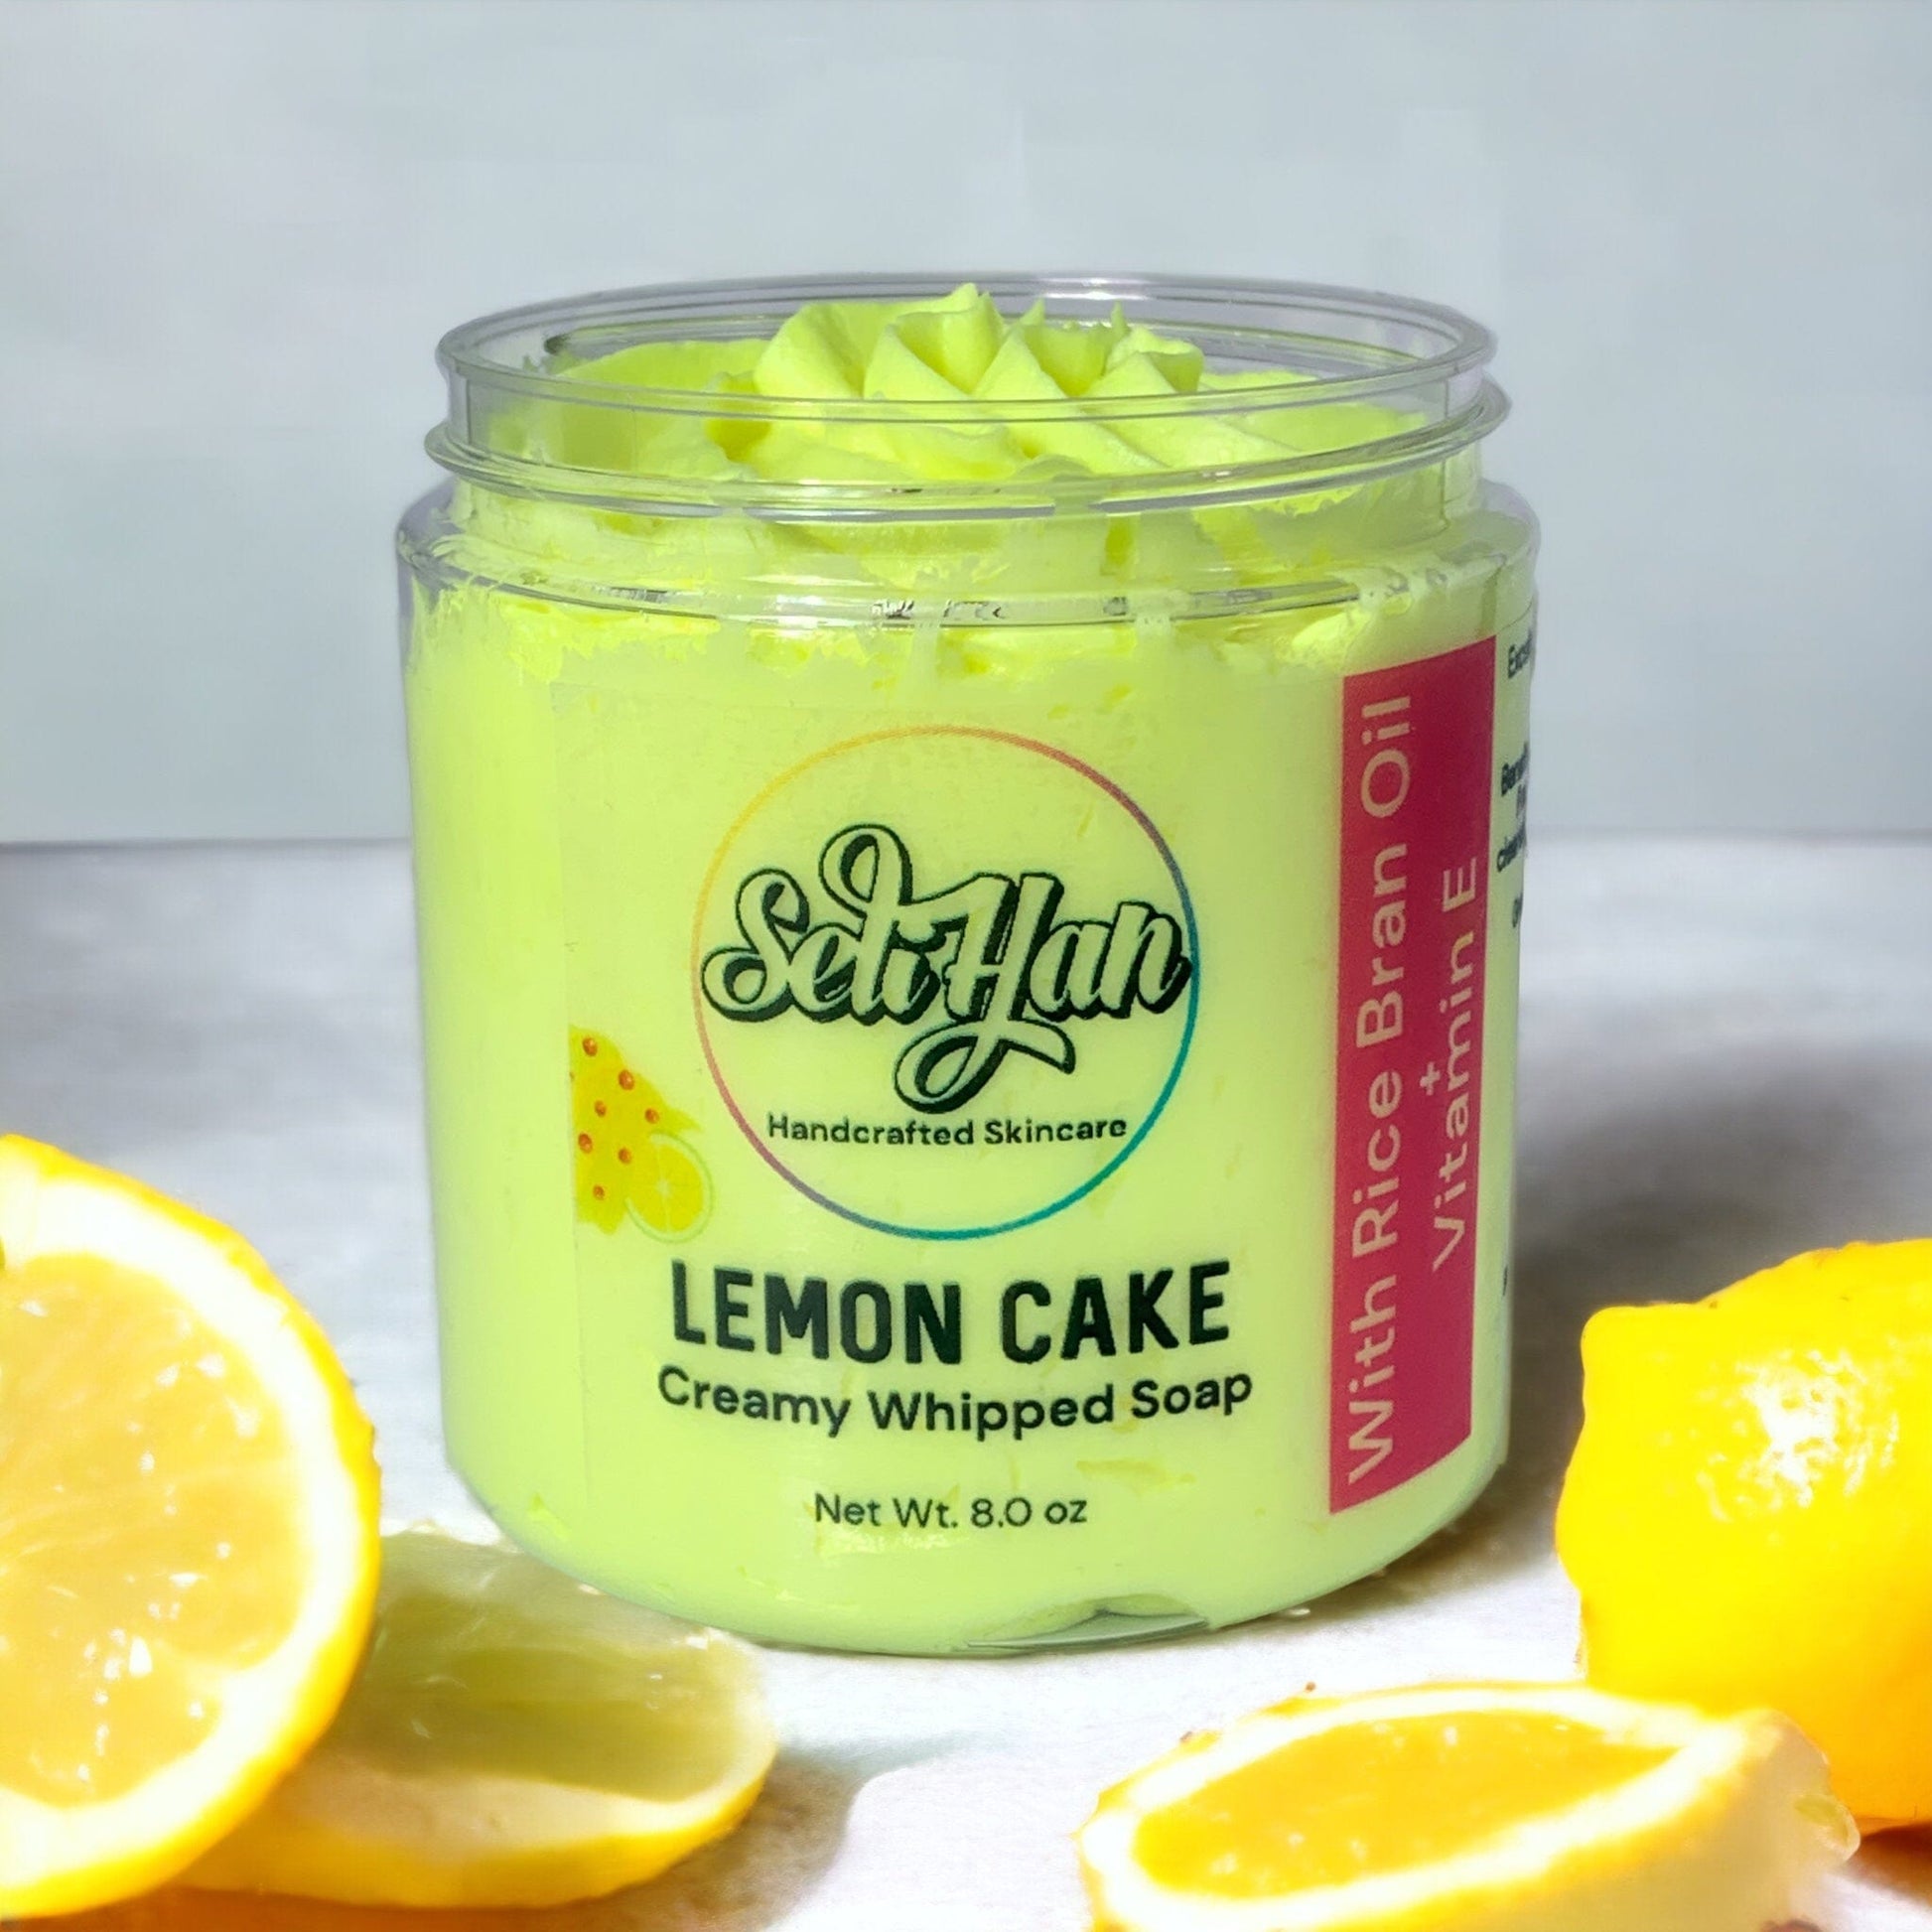 Lemon Cake Whipped Soap – Seli Han Skincare